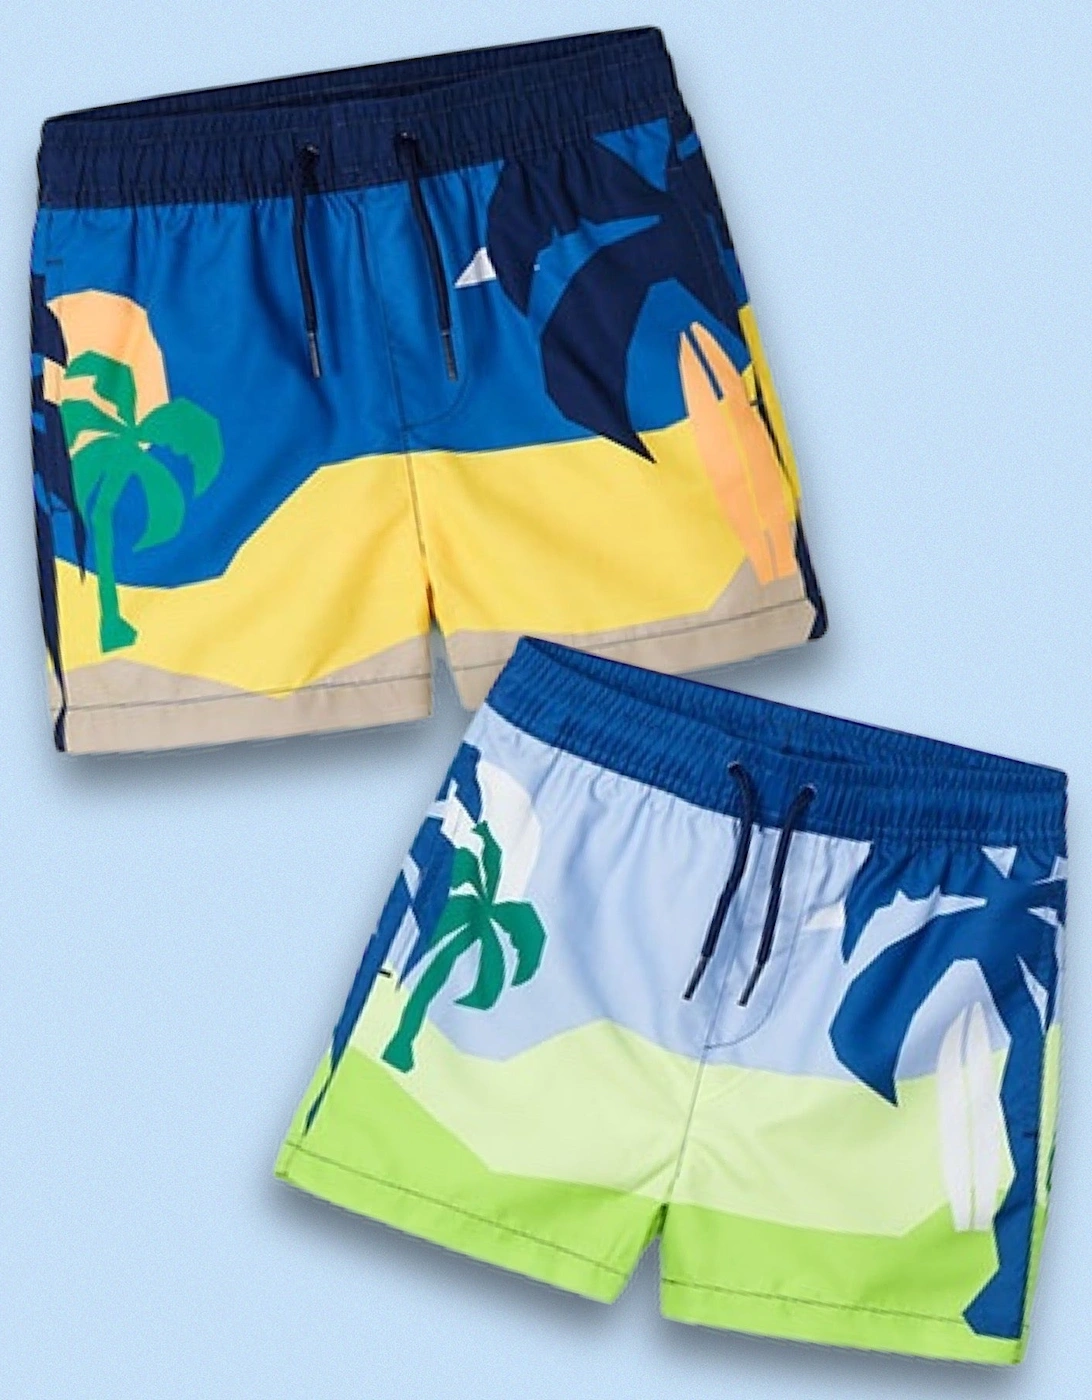 Electric Blue Multi Swim Shorts